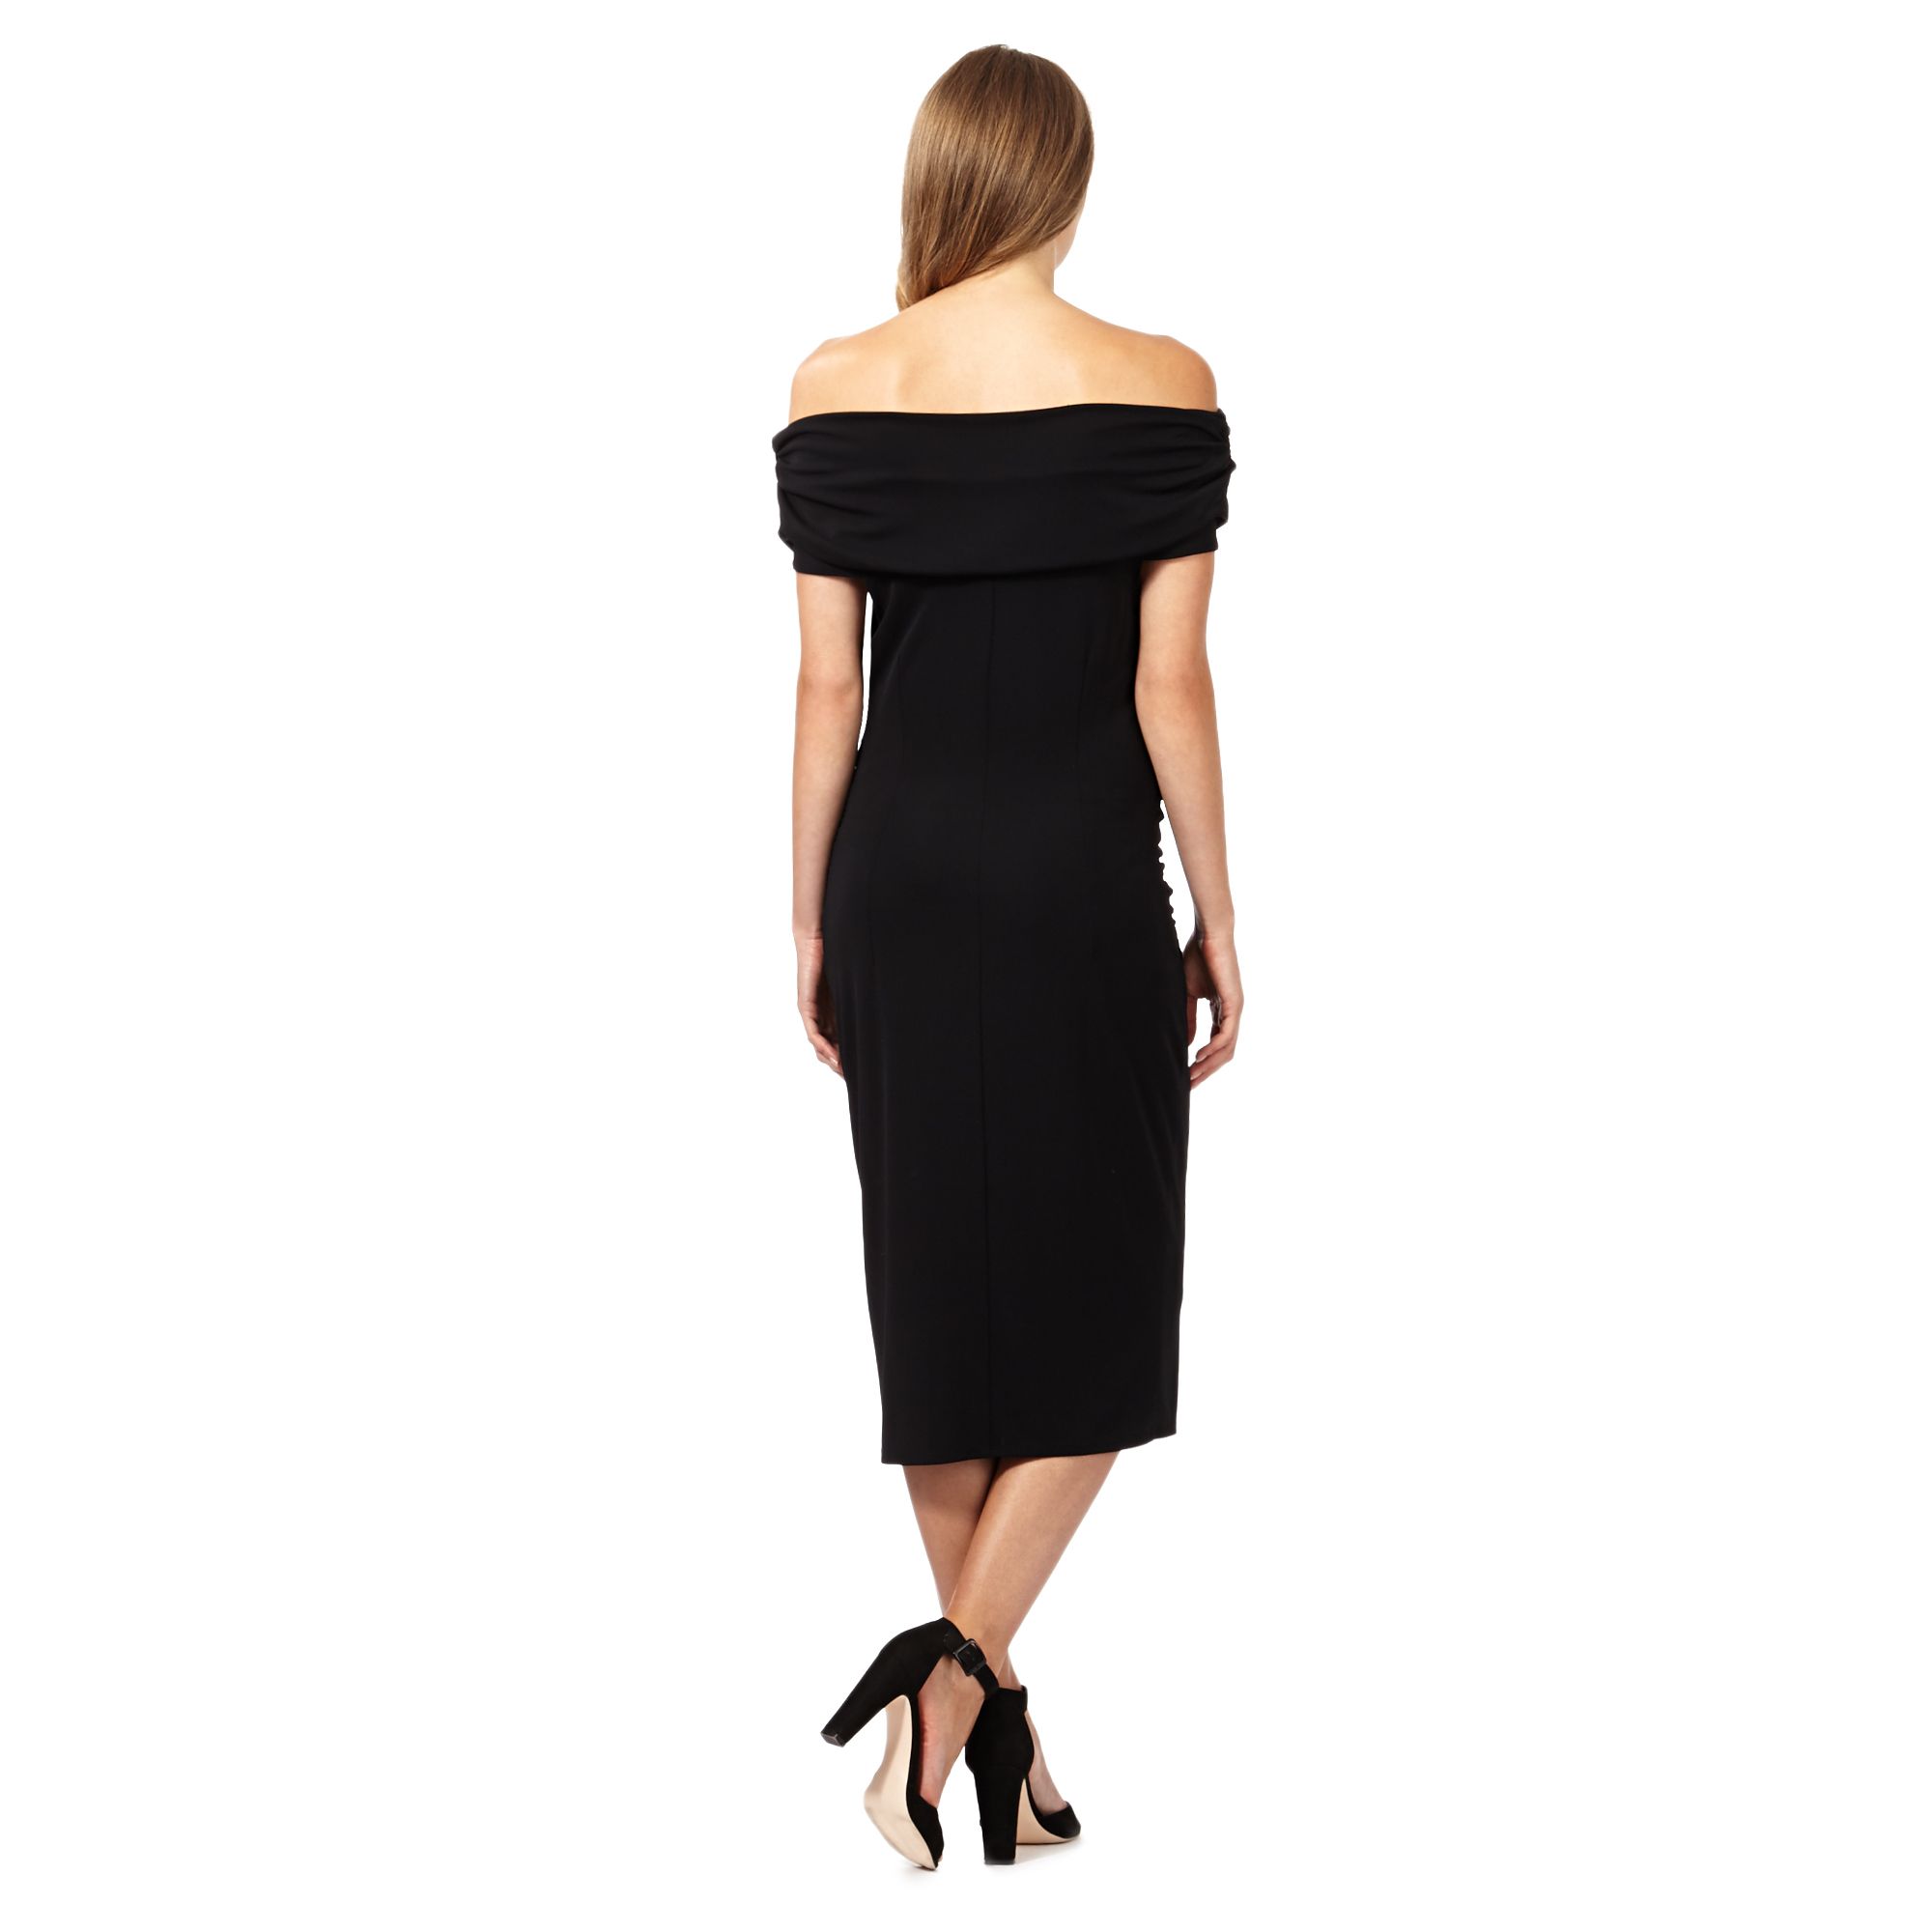 Star By Julien Macdonald Womens Designer Black Ruched Bardot Dress | eBay